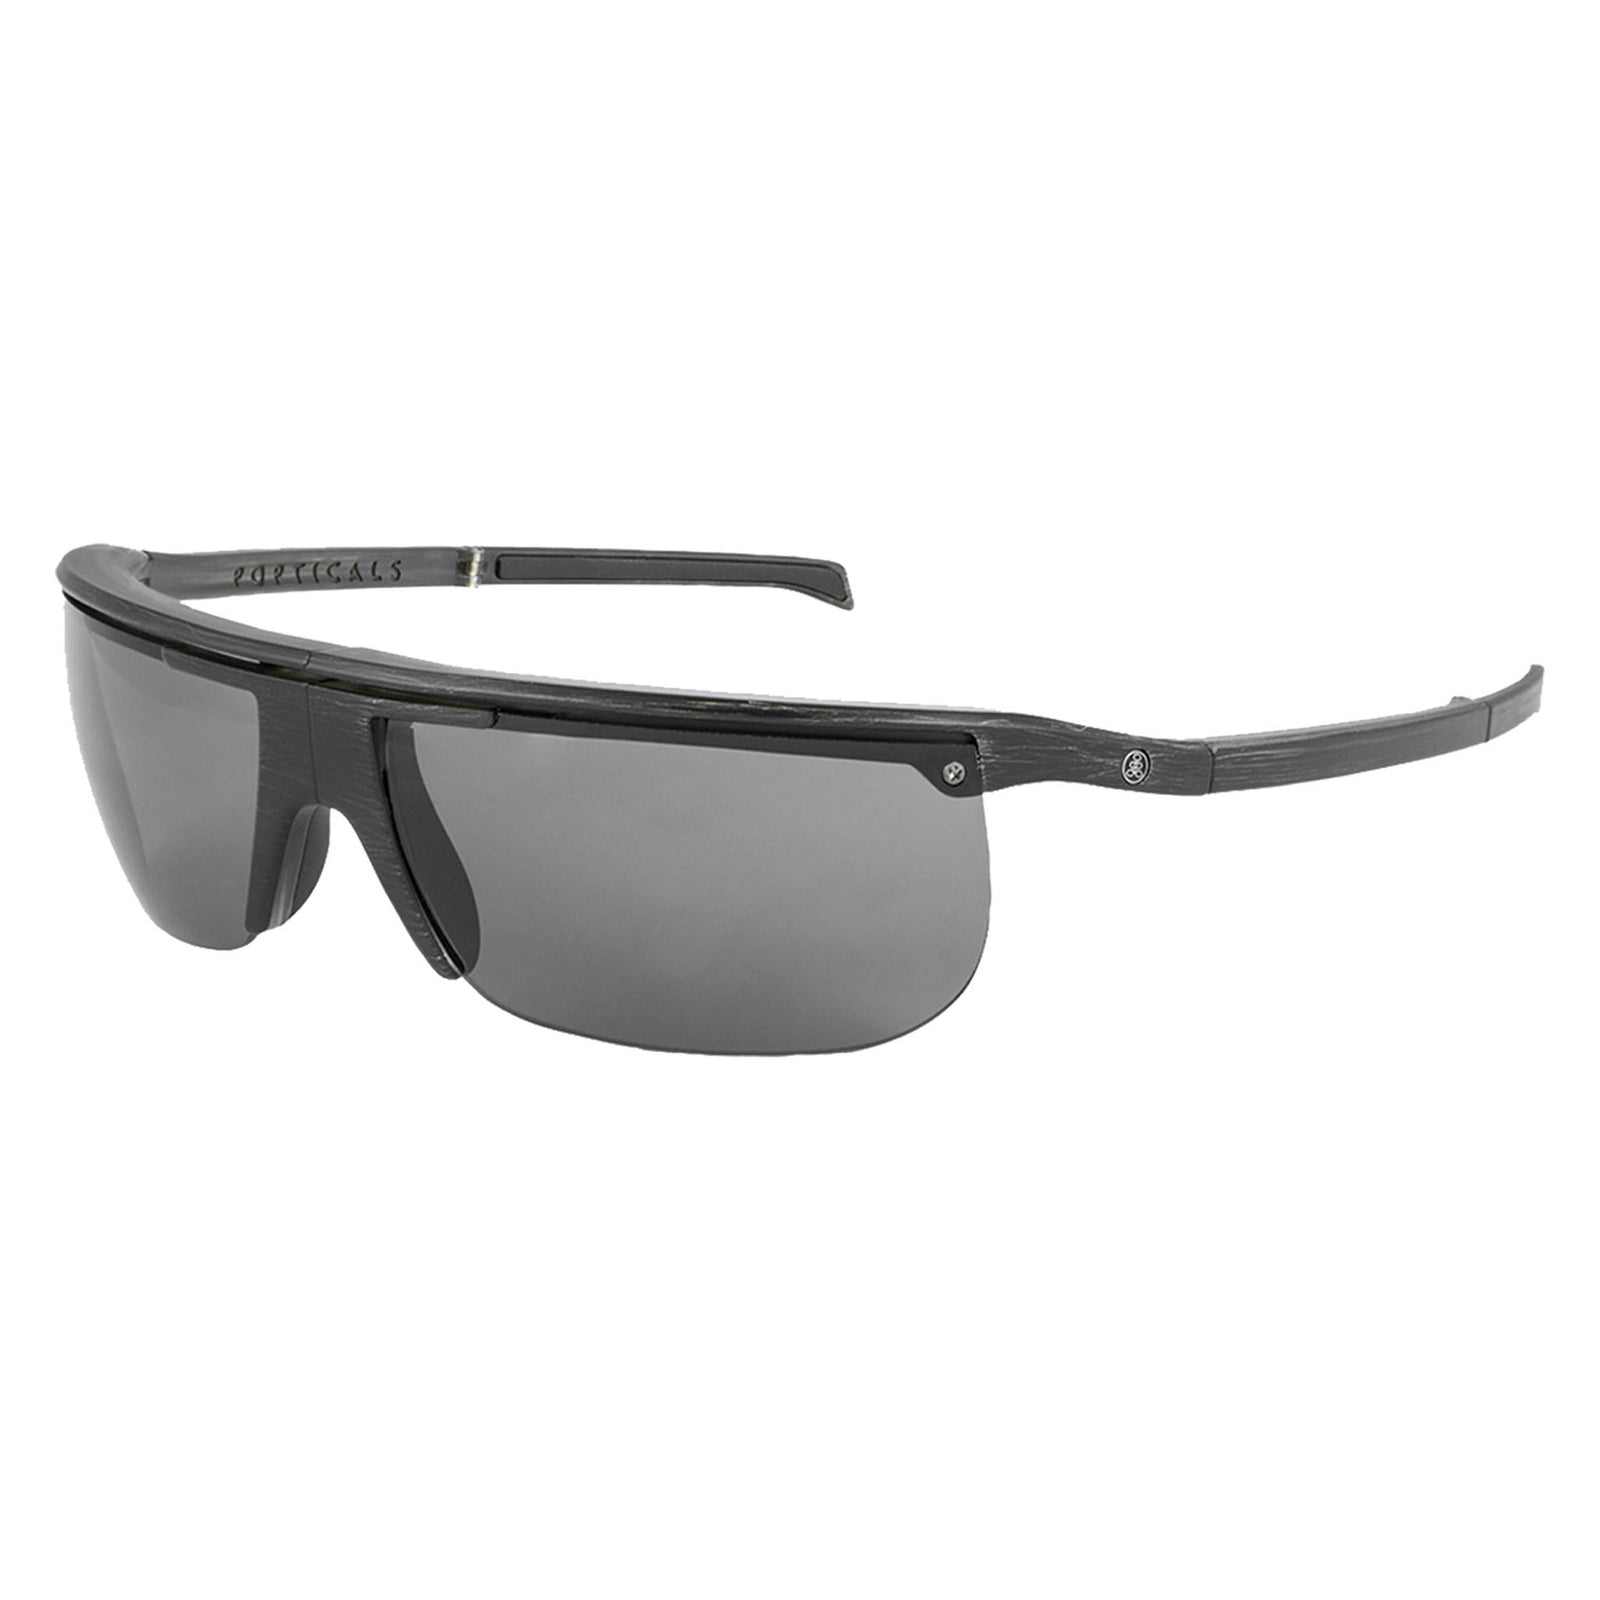 Popticals, Premium Compact Sunglasses, PopArt, 090030-ZUGP, Polarized Sunglasses, Matte Brush Black Frame, Gray Lenses, Glam View